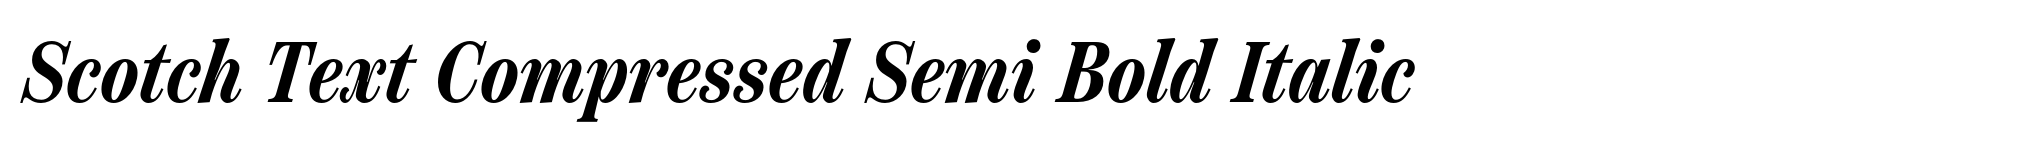 Scotch Text Compressed Semi Bold Italic image